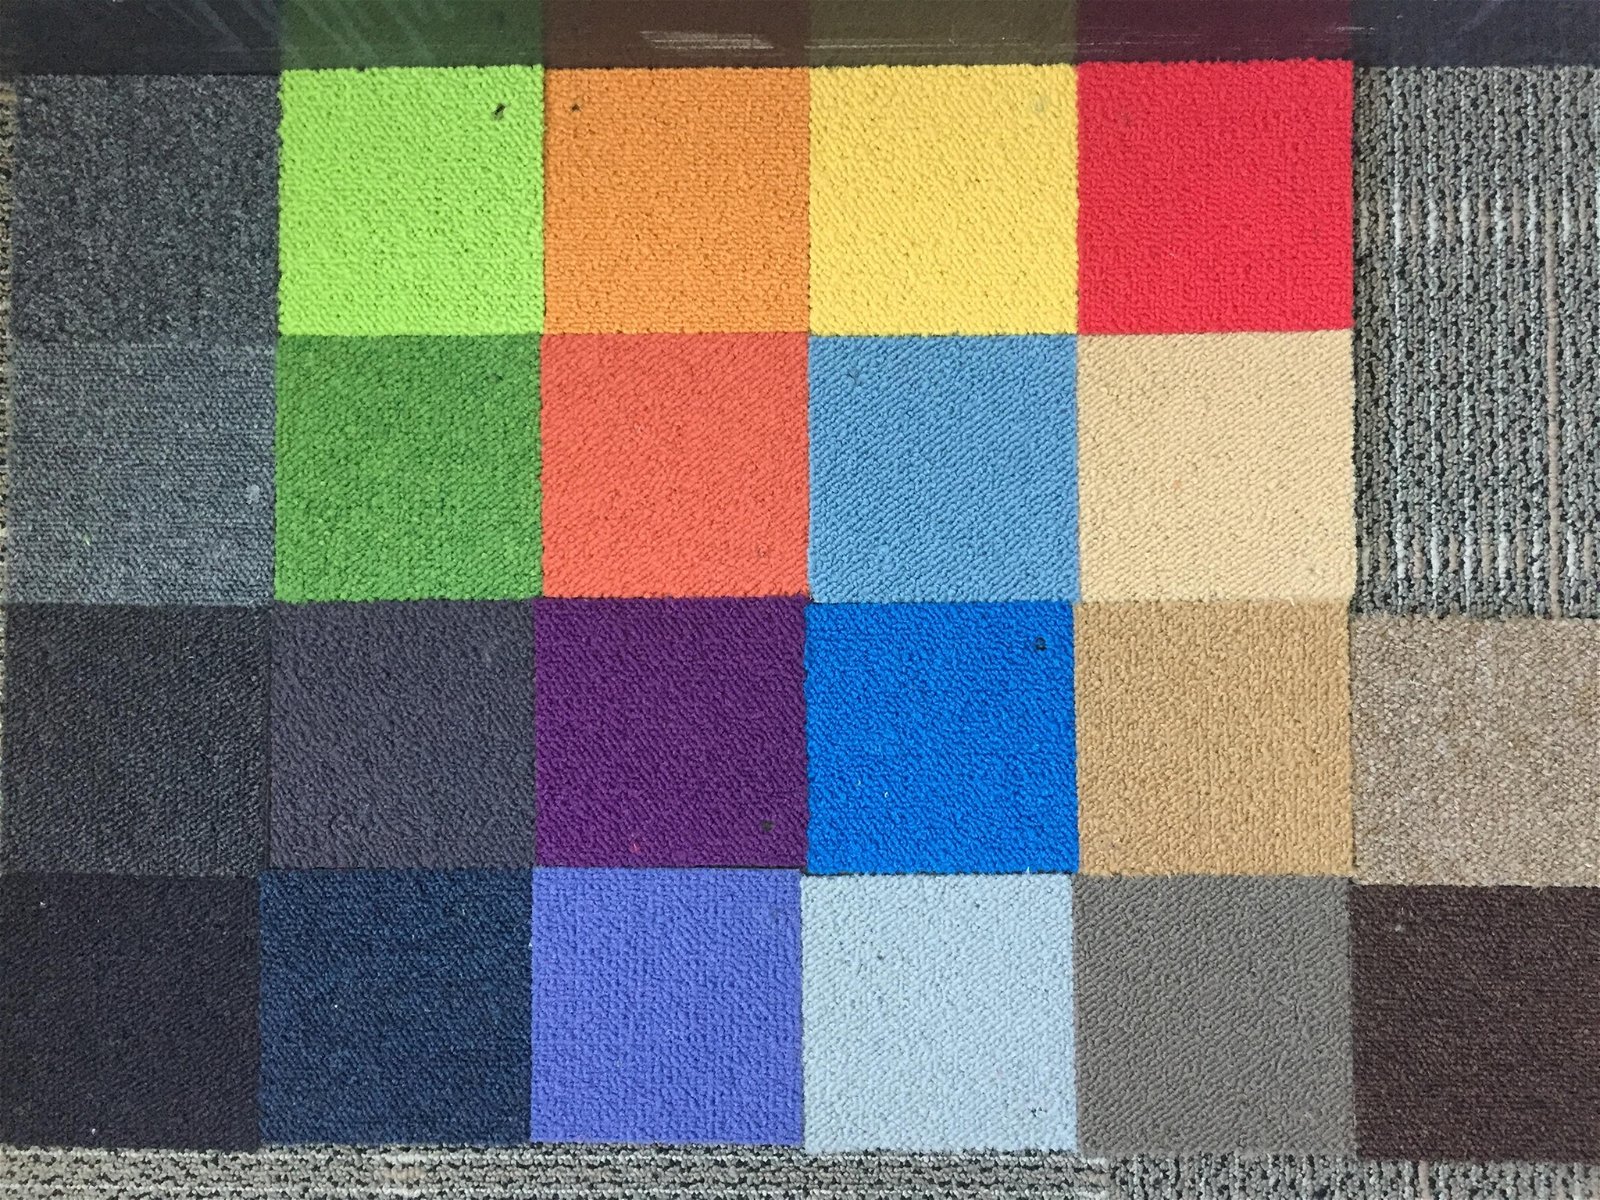 Tile carpet 2